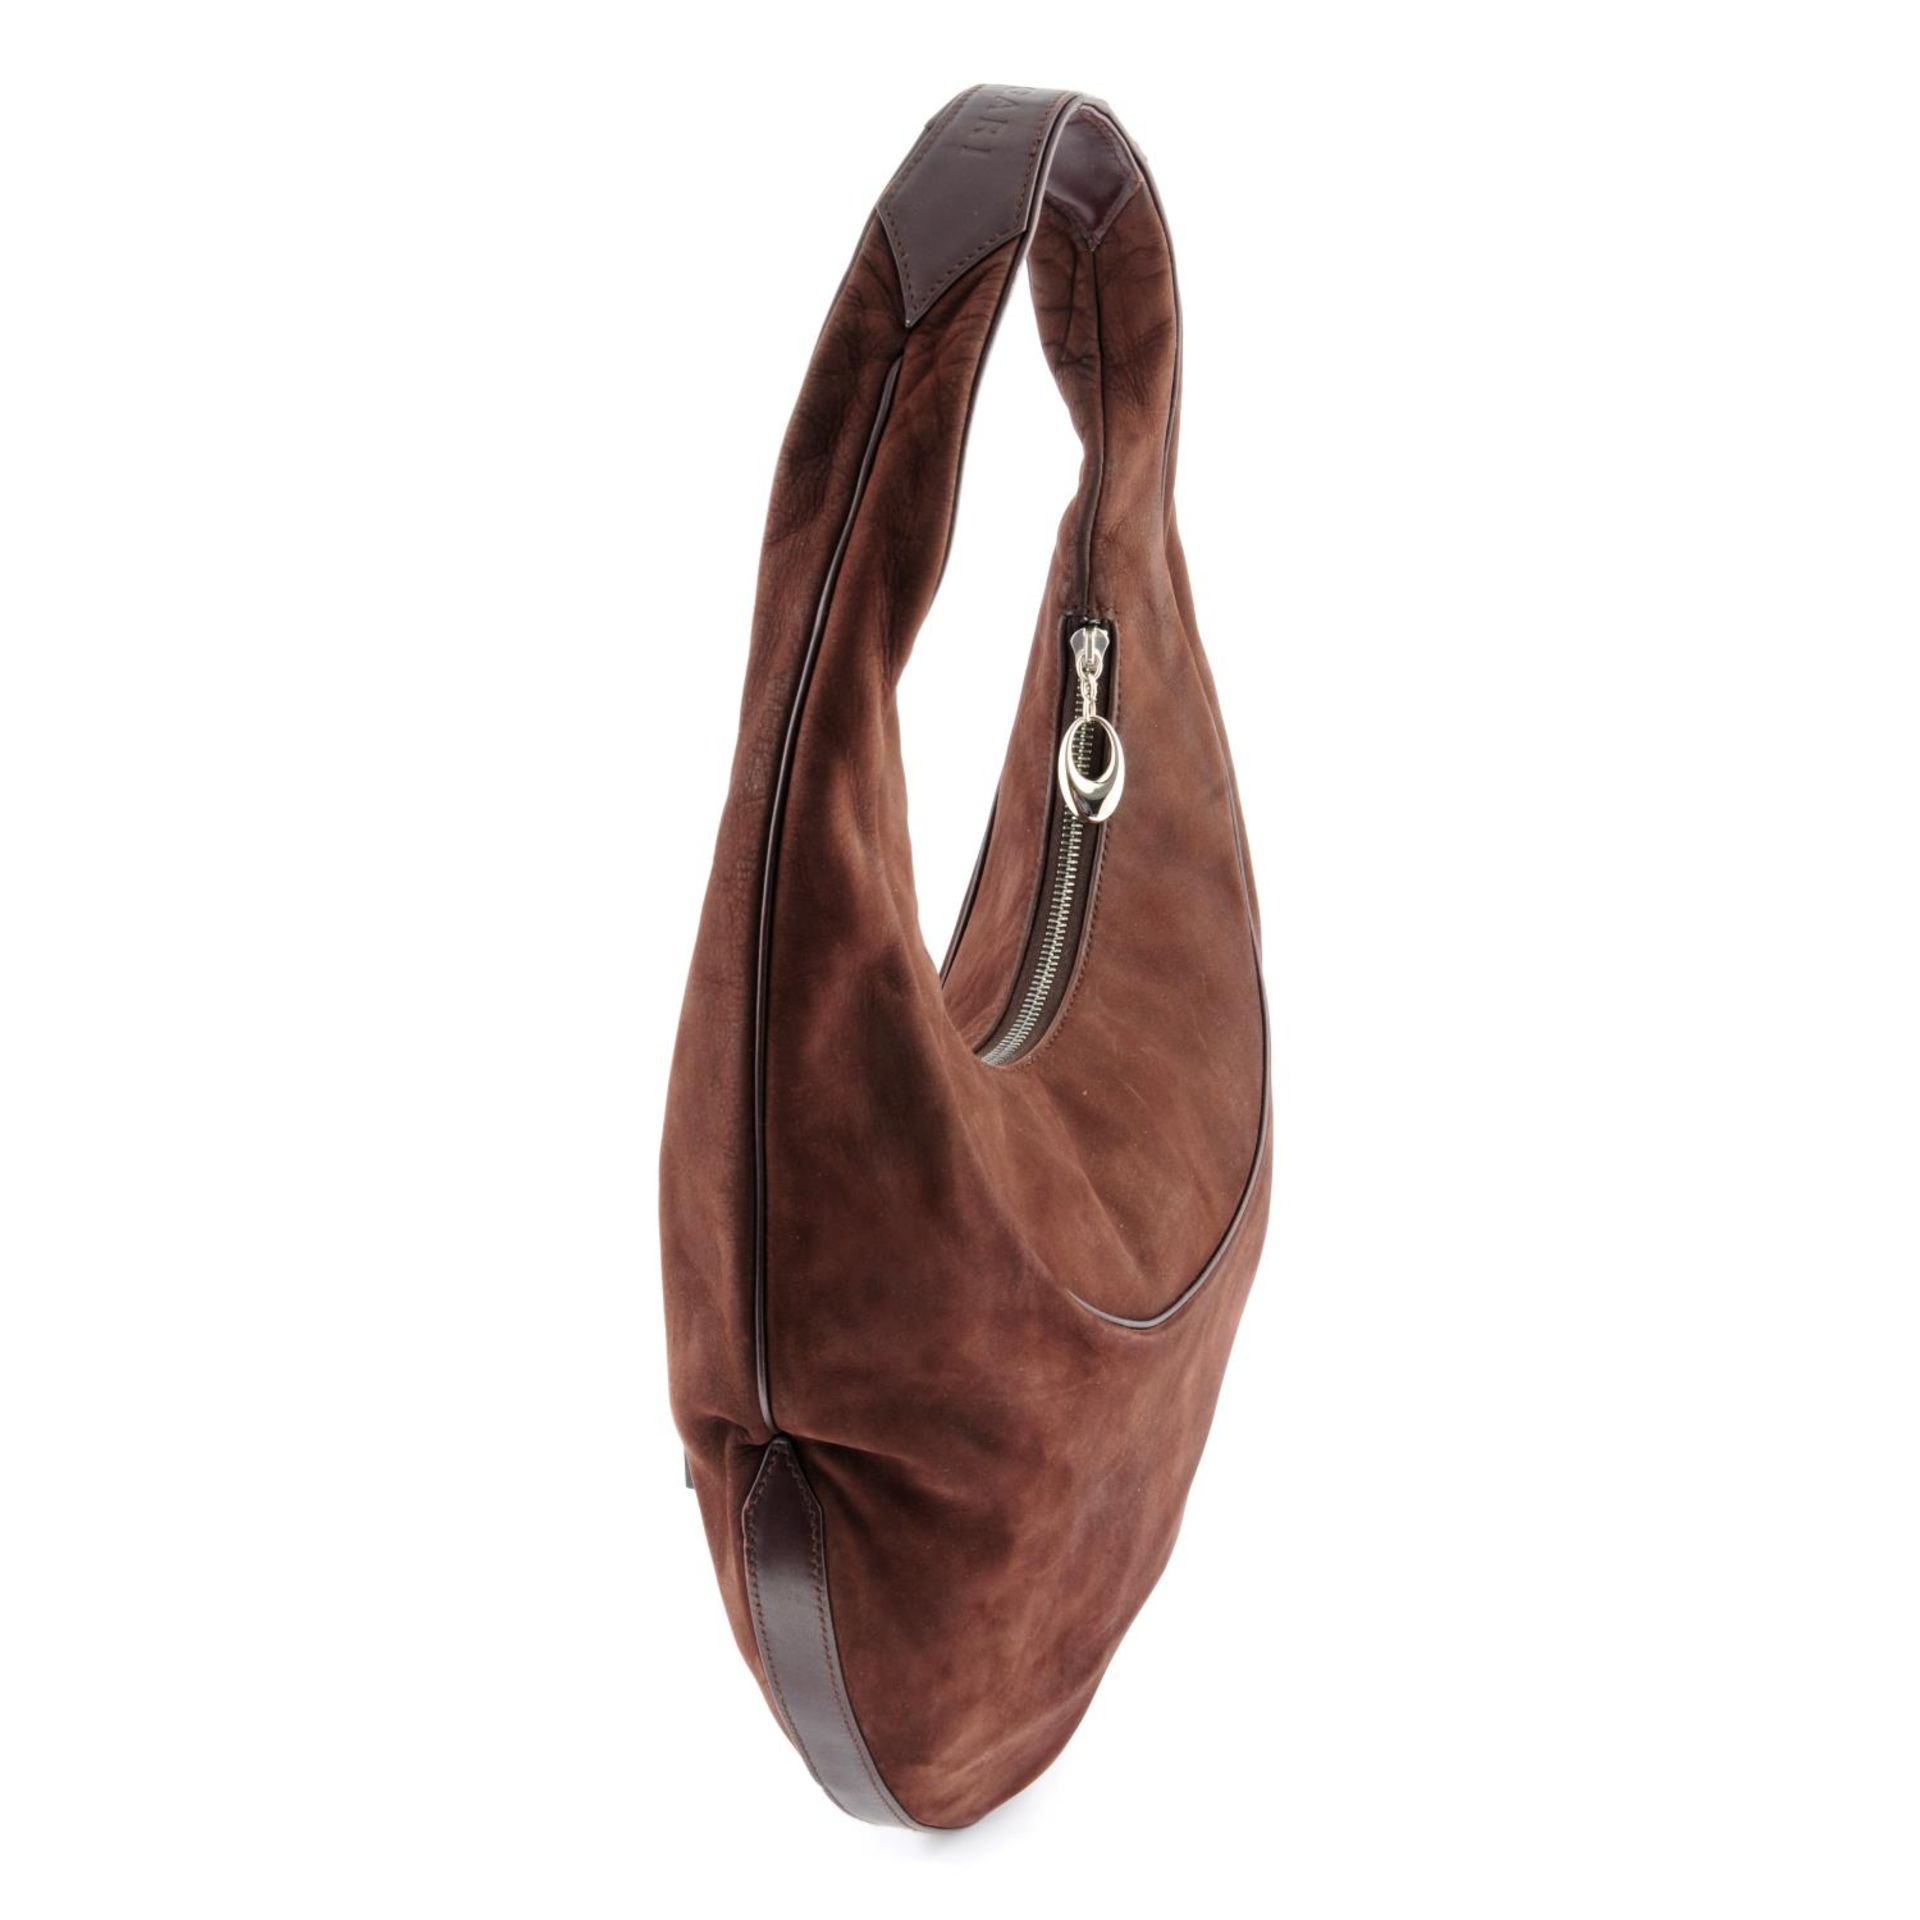 BULGARI - a brown suede Oval handbag. - Image 3 of 5